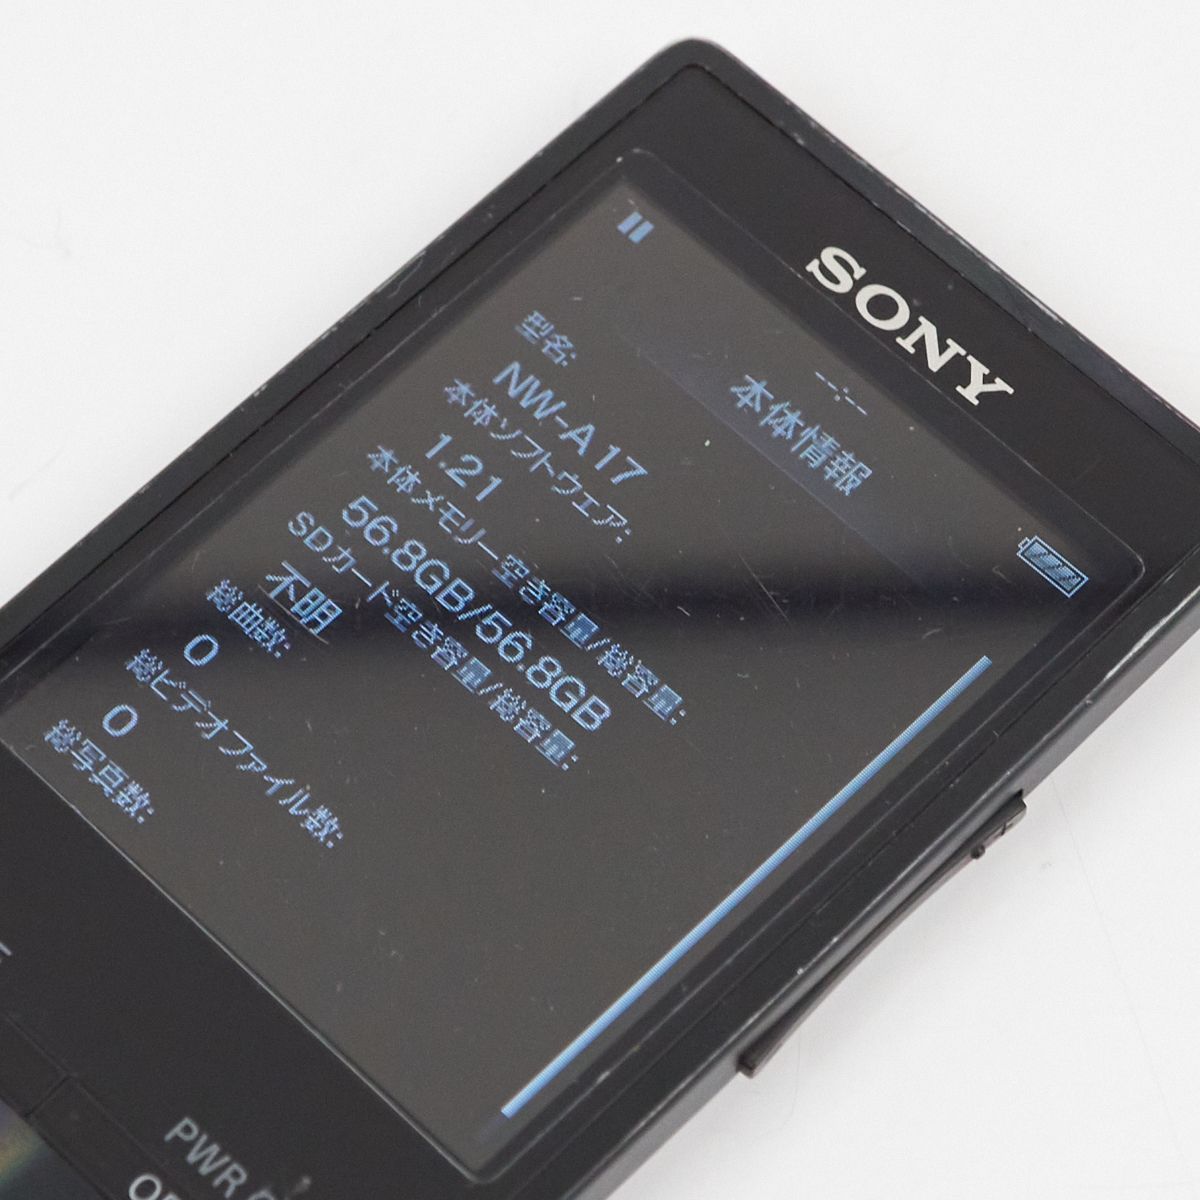 SONY WALKMAN ウォークマン NW-A17 64GB USED品 本体のみ ブラック